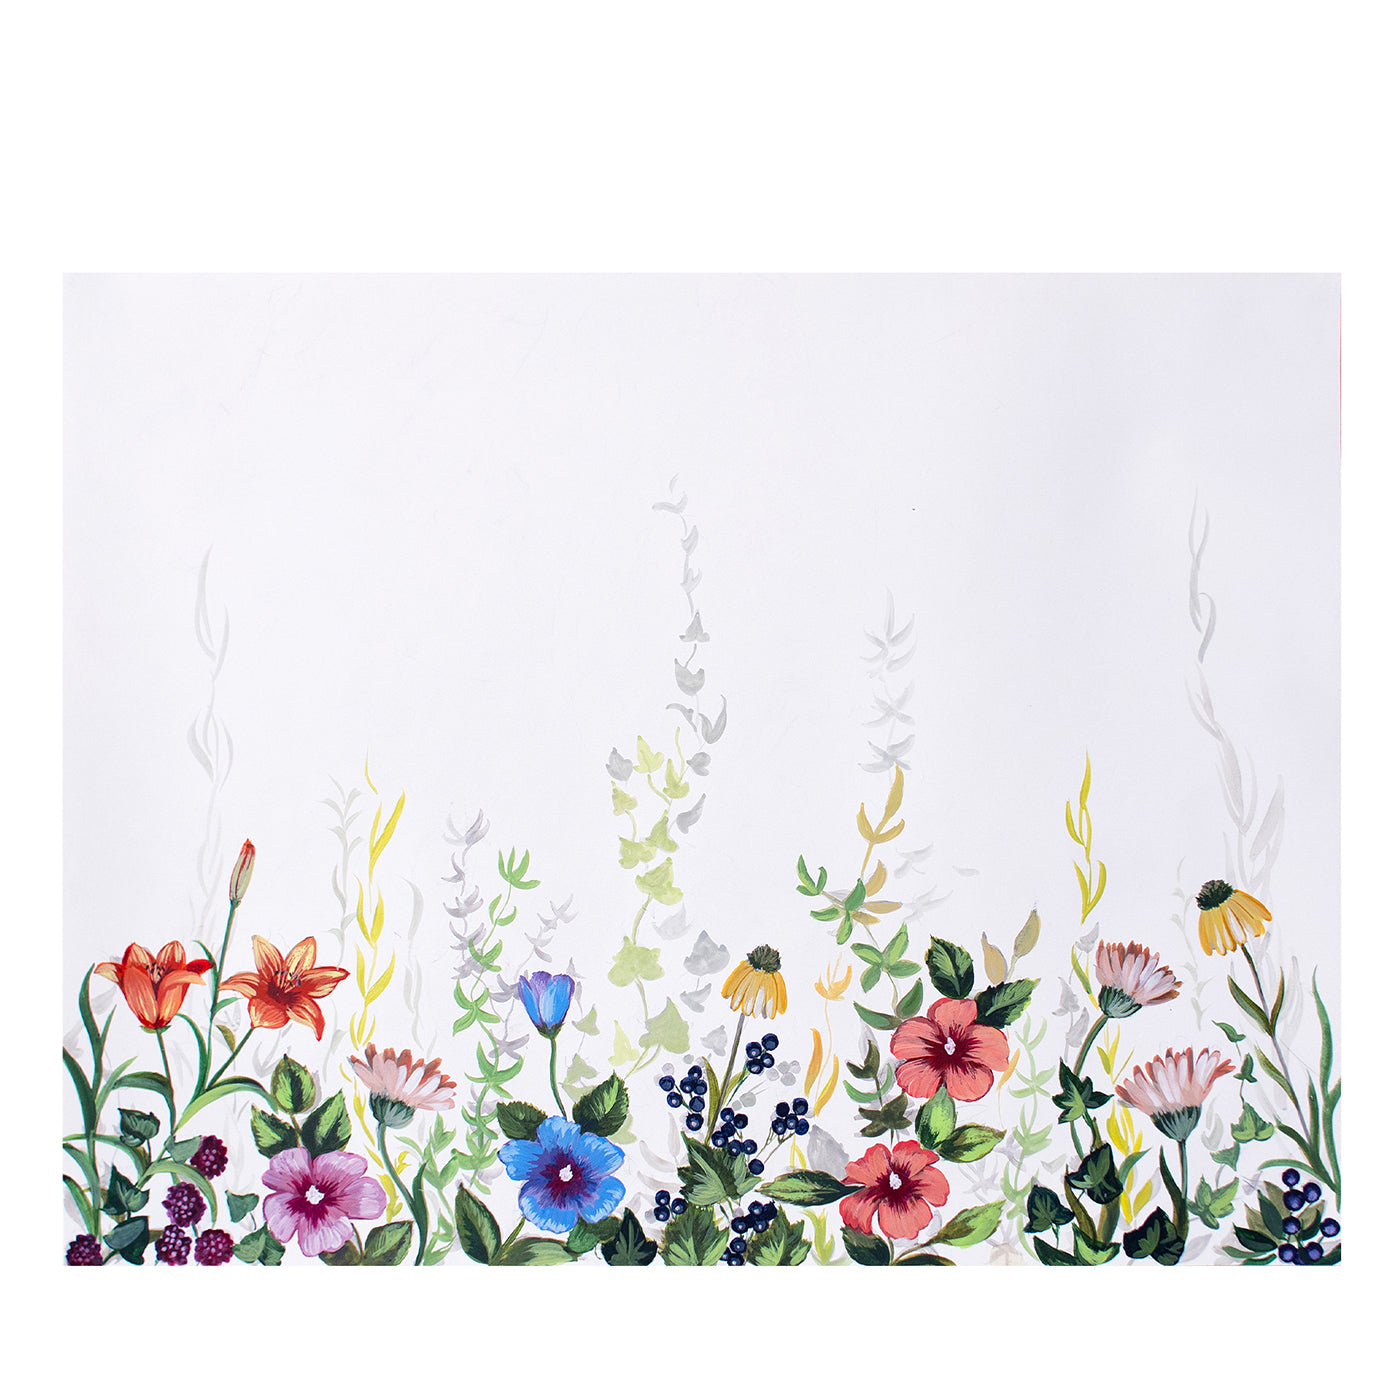 Flowers Wallpaper #2 - Main view